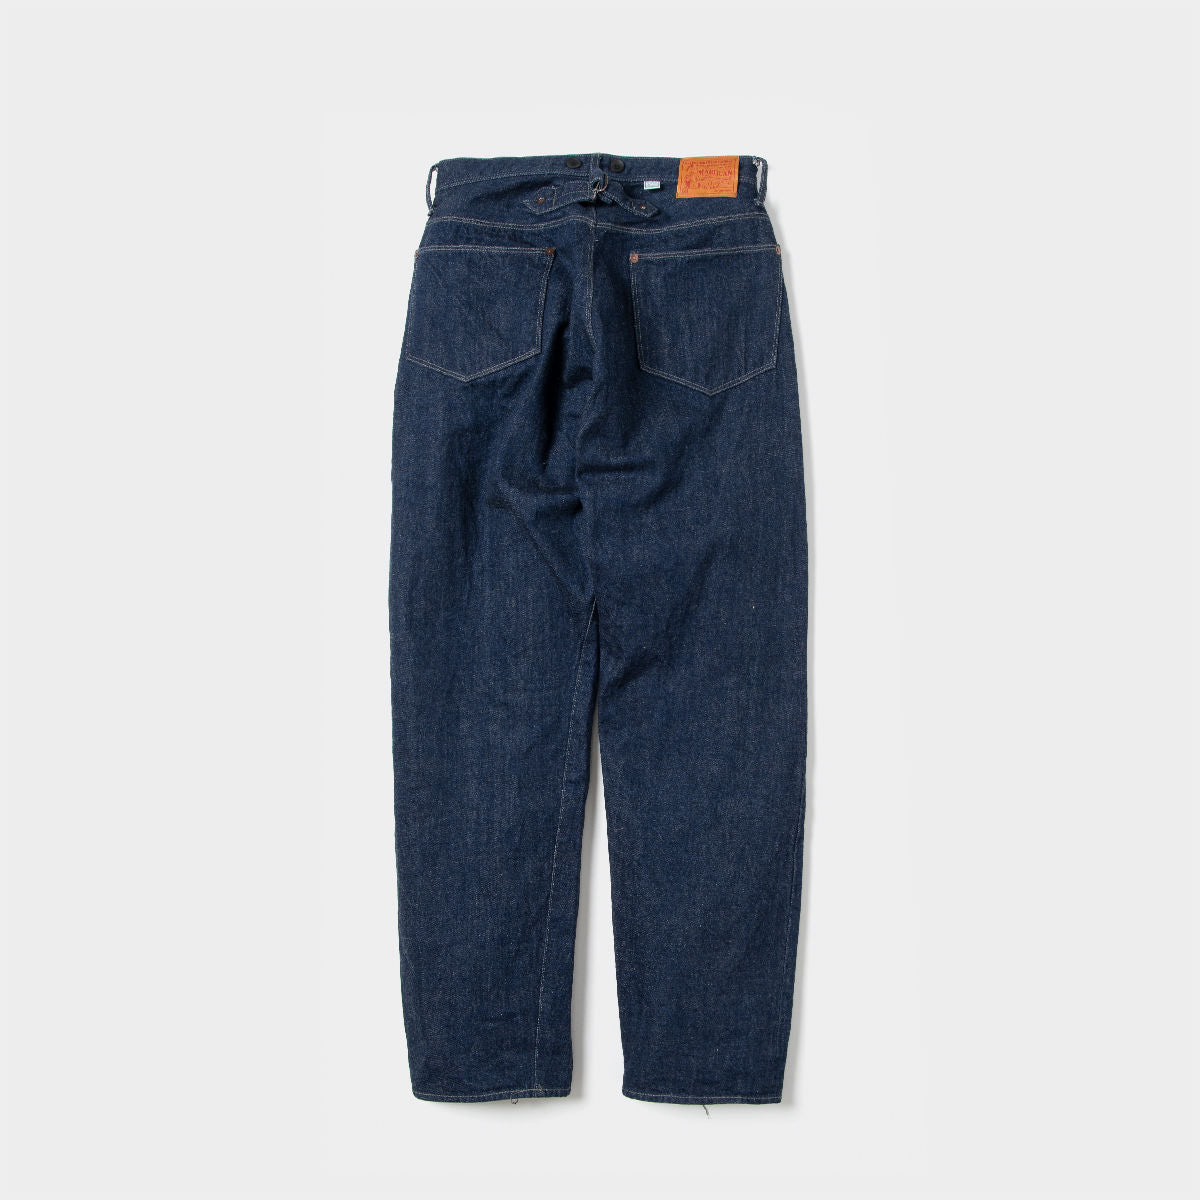 Orgueil Natural Indigo Tailor Jeans【OR-1089】